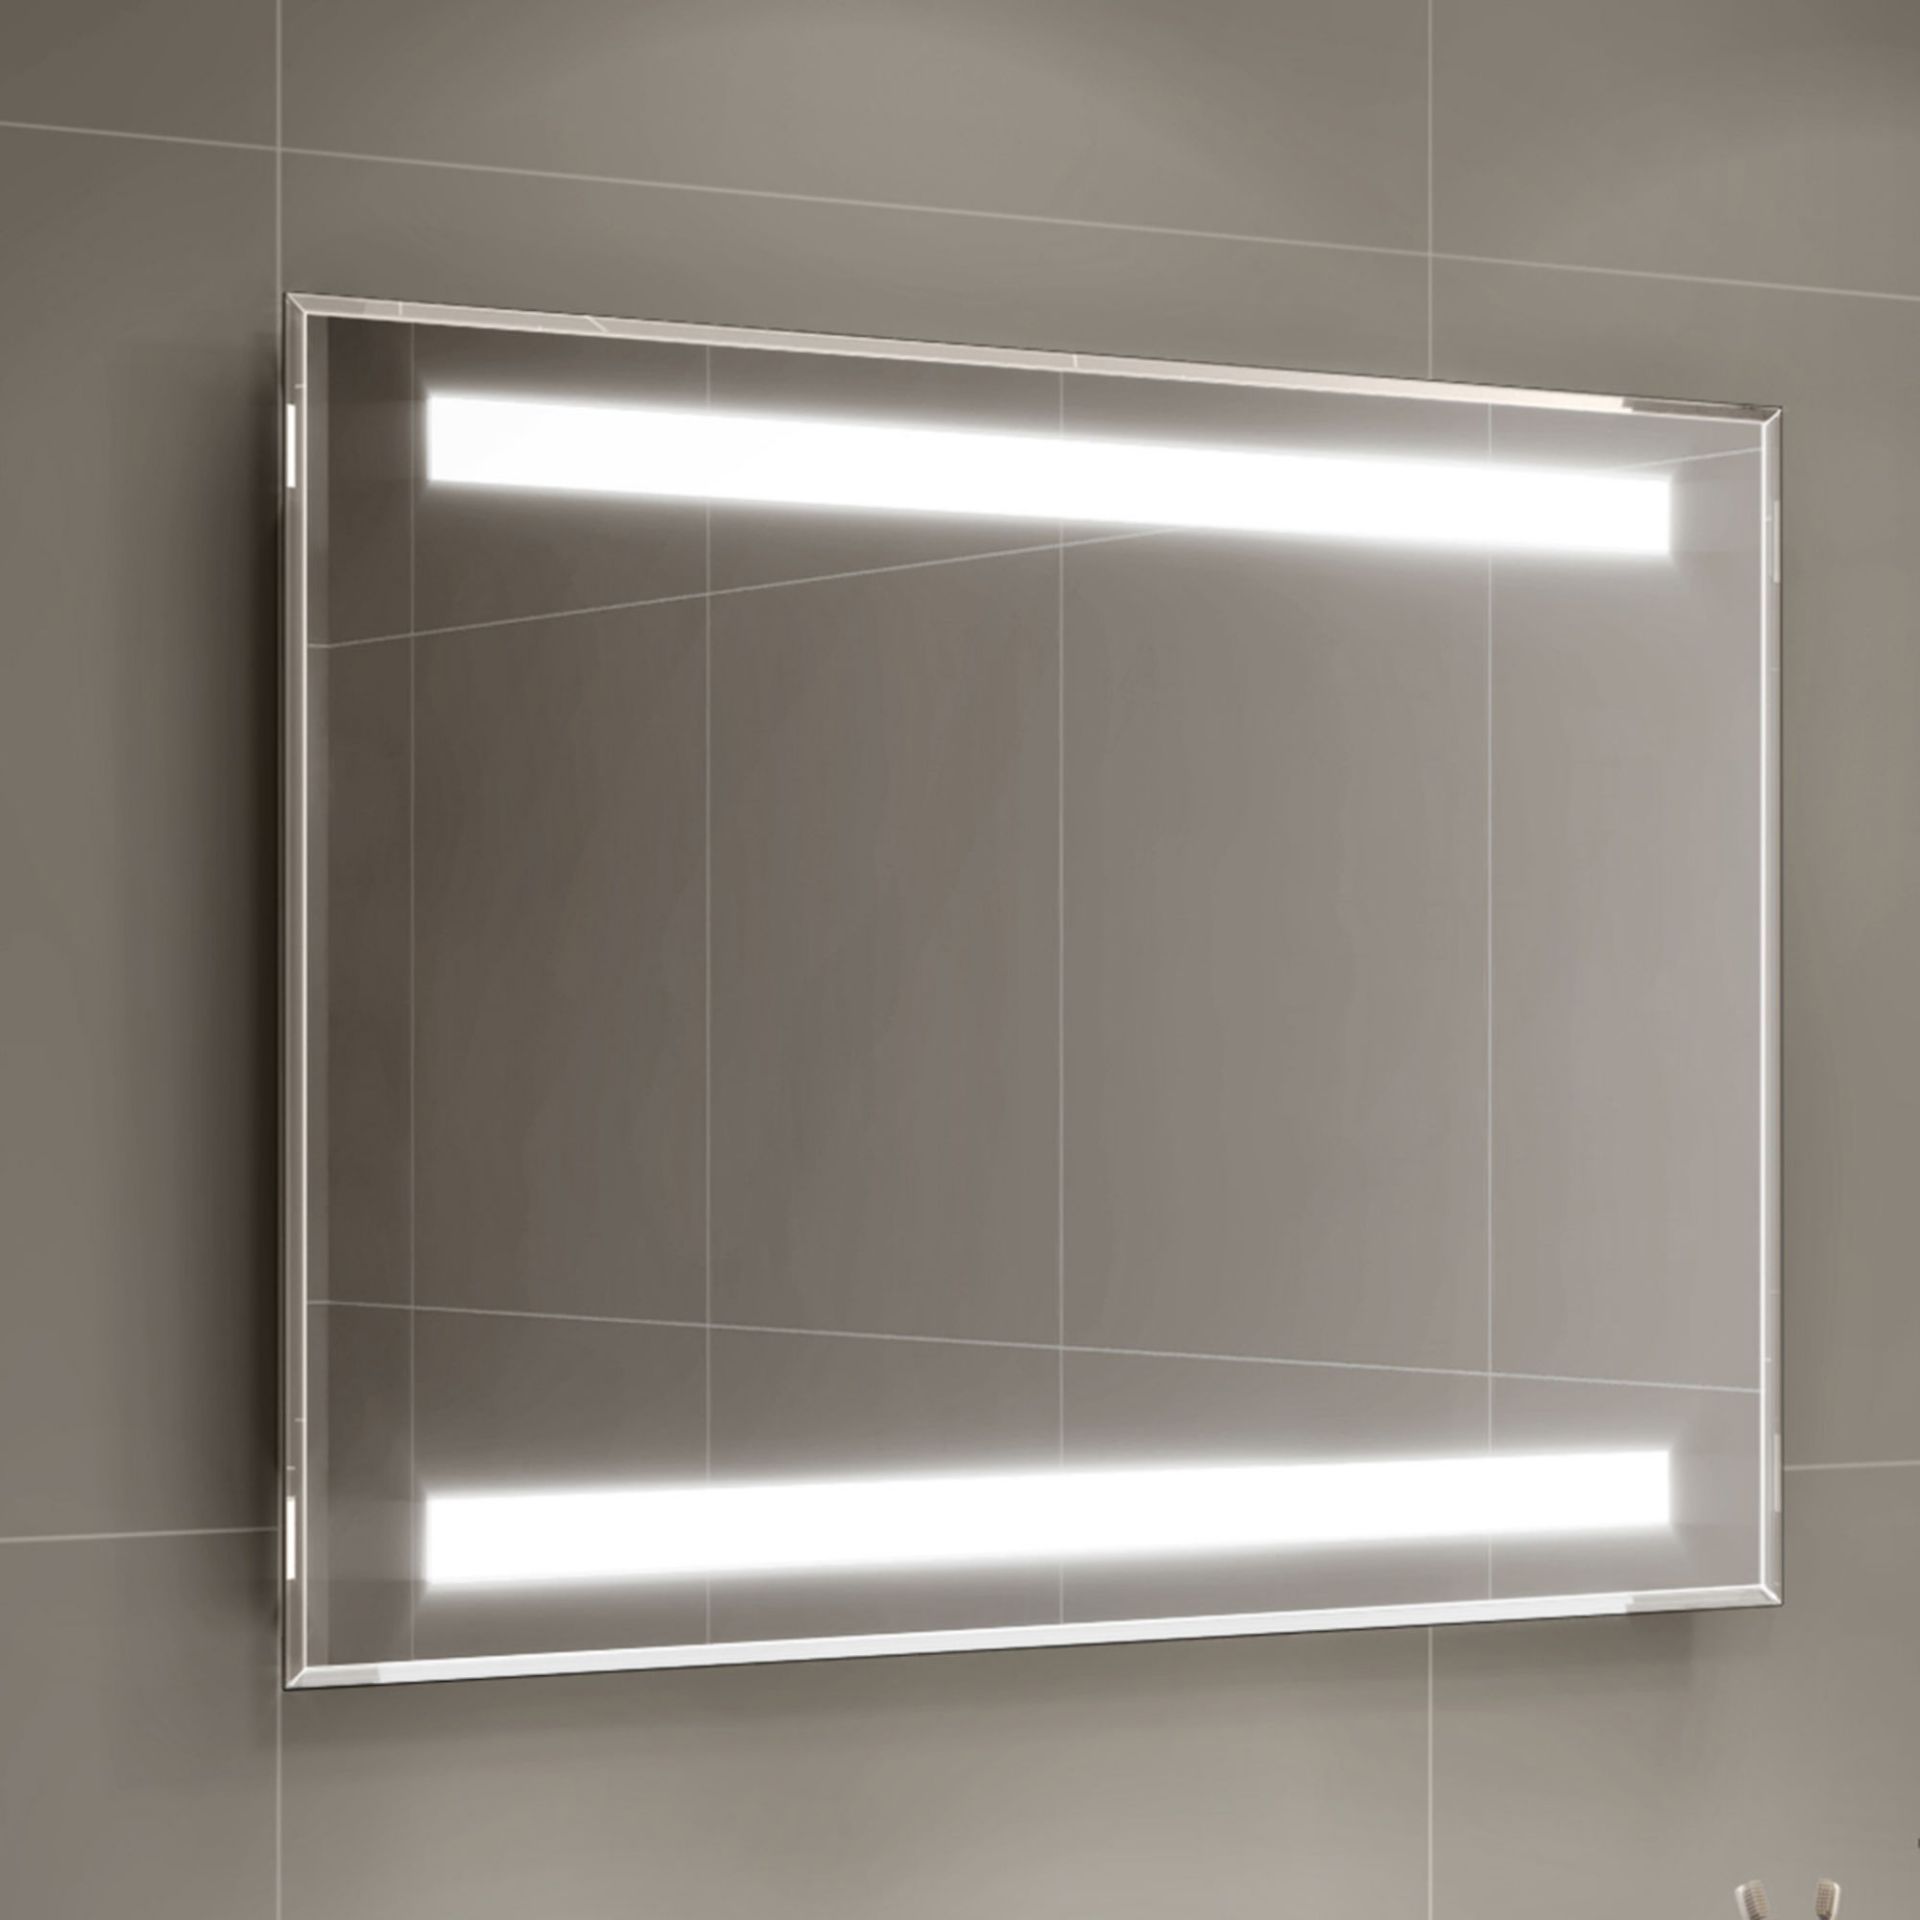 New 600 x 800mm - Omega Illuminated Led Mirror . RRP £499.99.Ml7003.Flattering Led Lights Provide